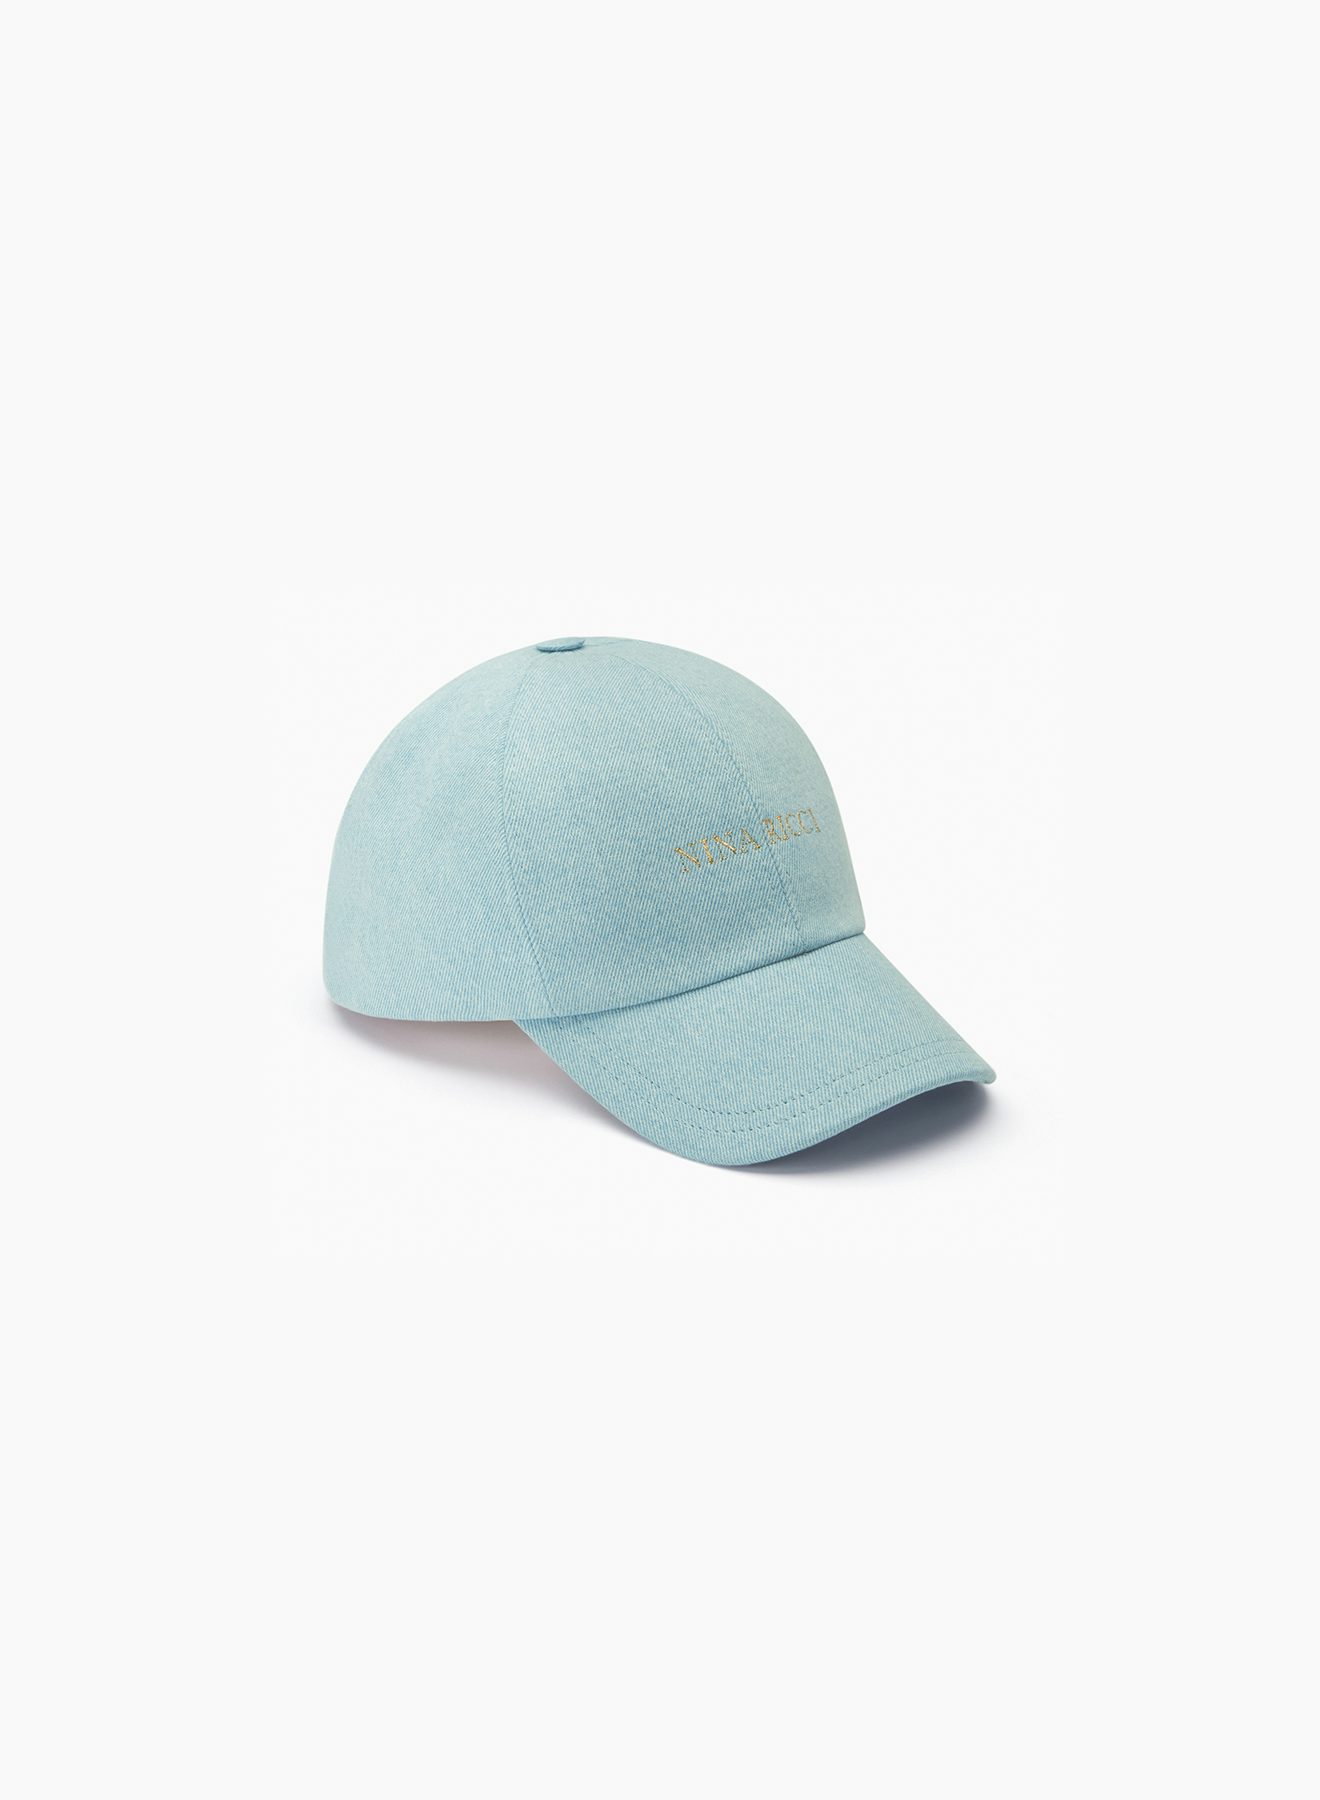 Denim baseball cap in light blue - Nina Ricci